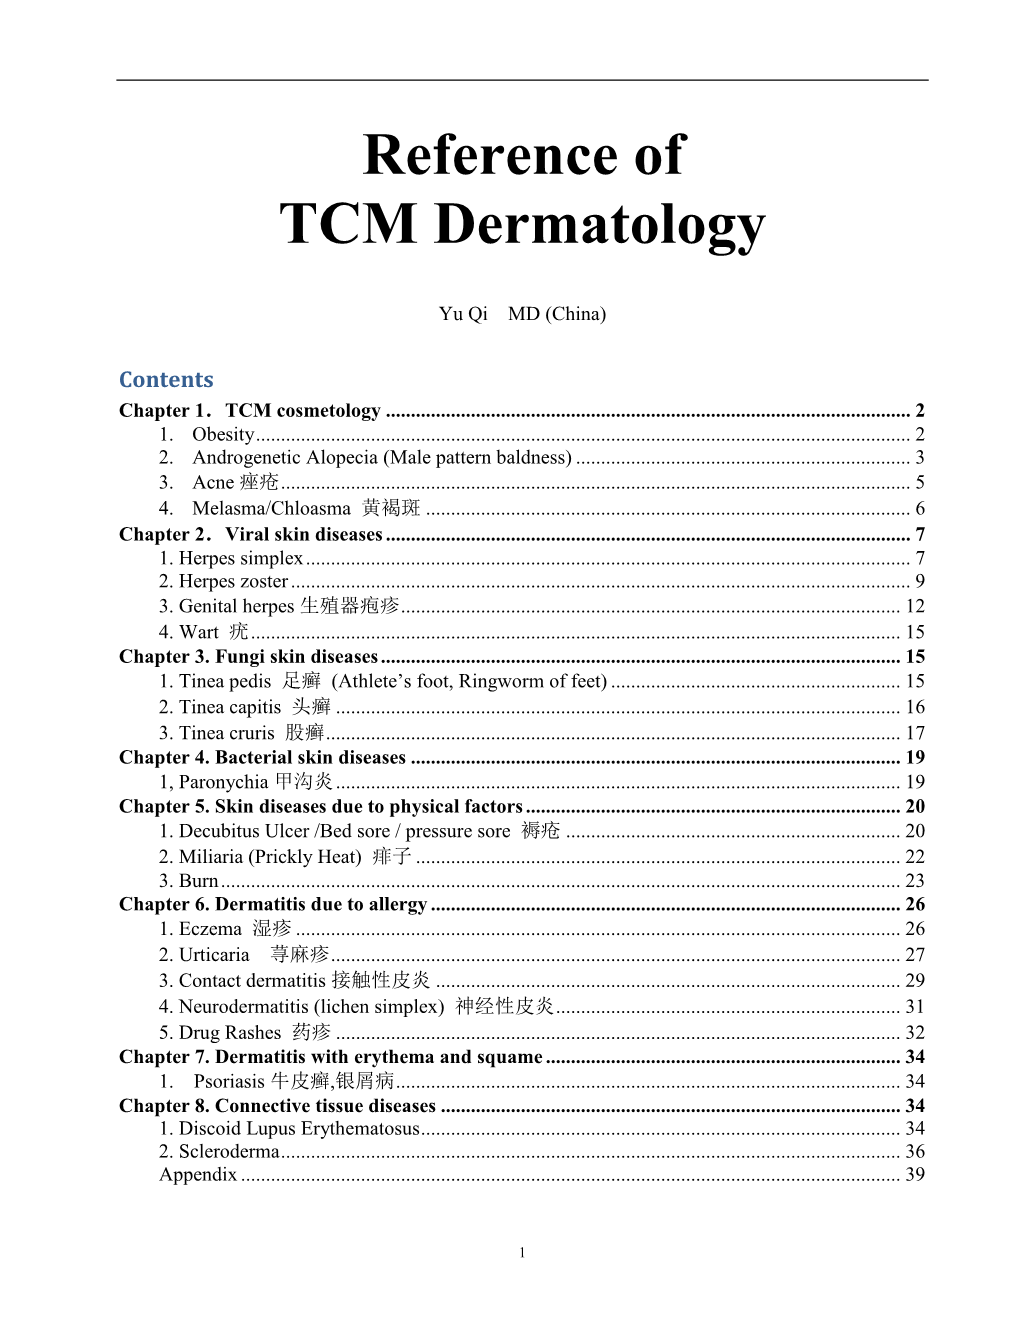 Reference of TCM Dermatology